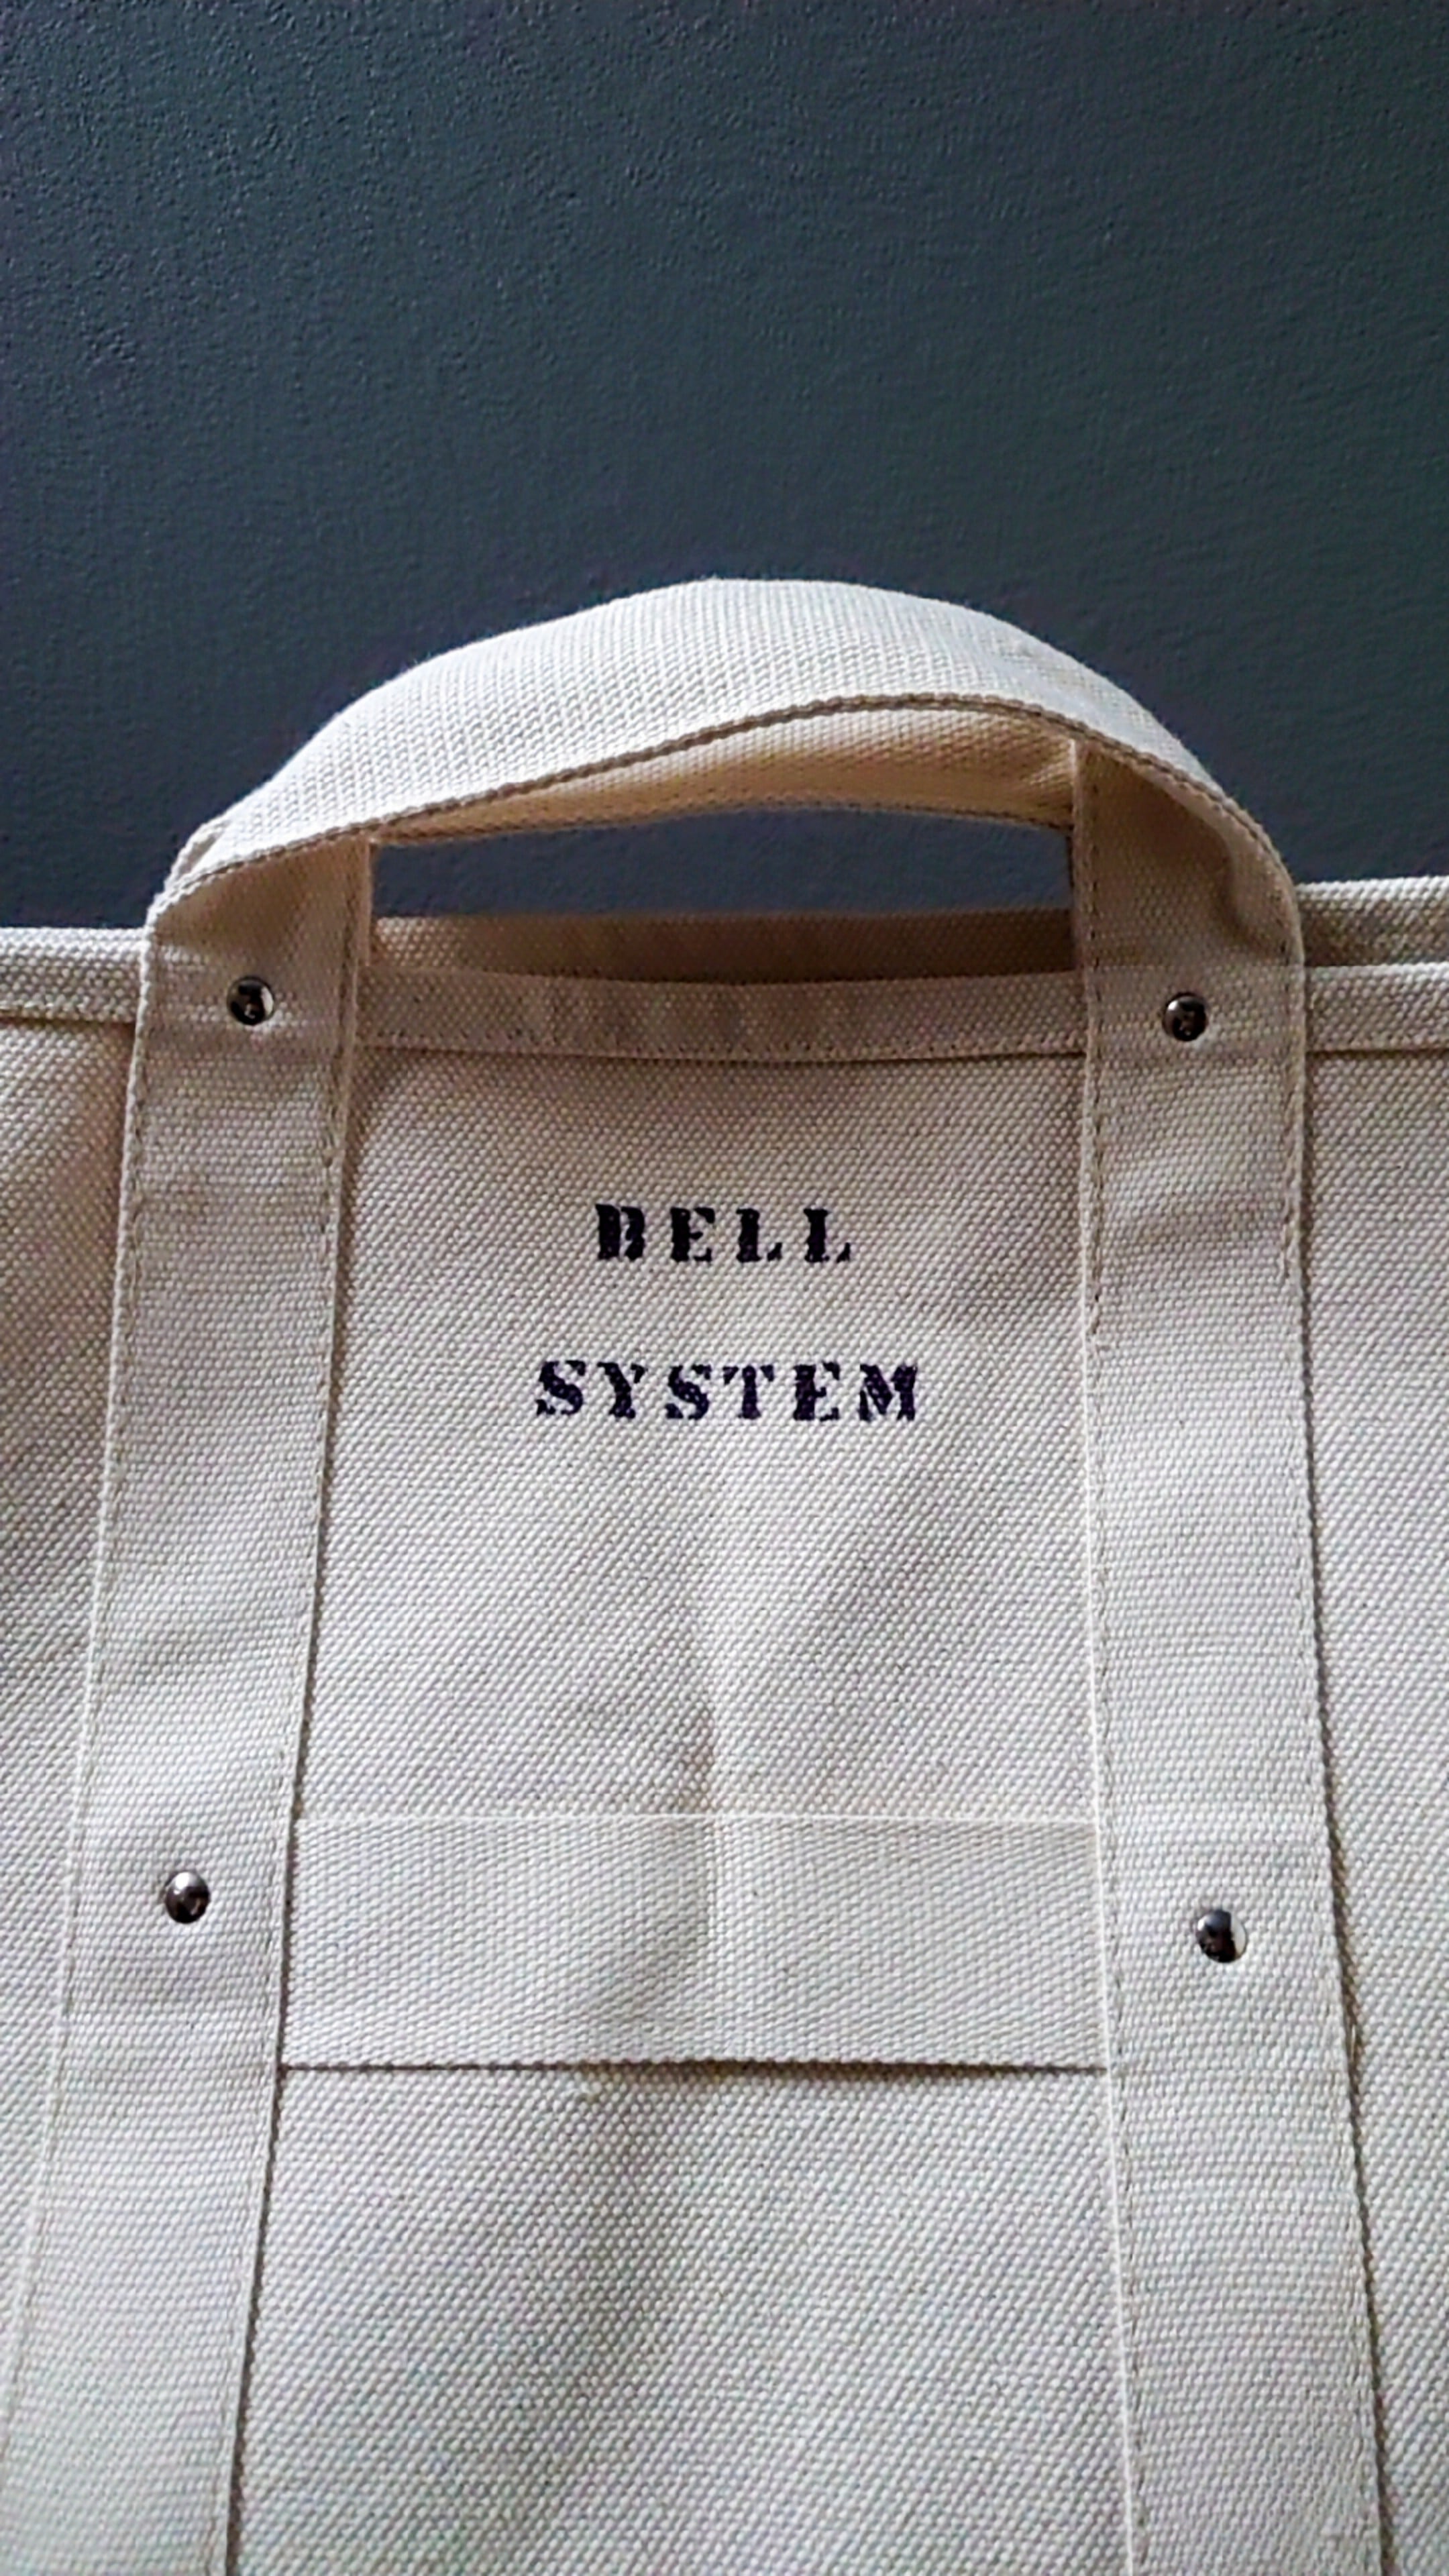 DEADSTOCK / 1970s】BELL SYSTEM社 ベルシステム社 キャンバス ツール